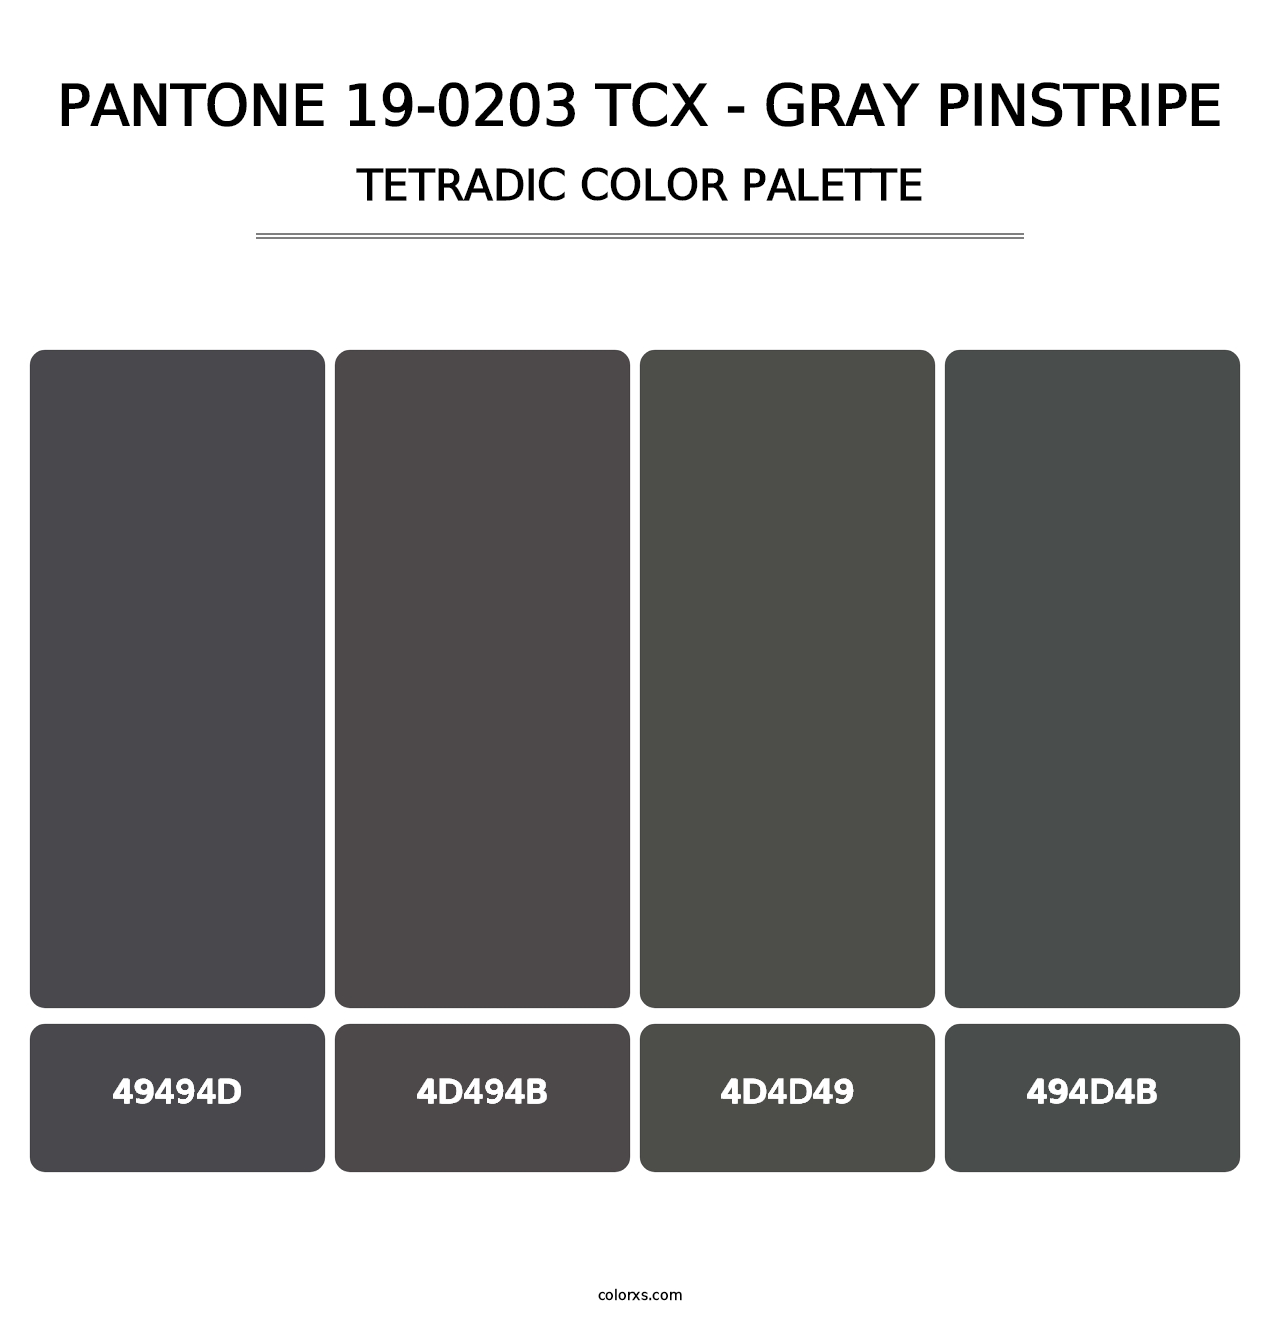 PANTONE 19-0203 TCX - Gray Pinstripe - Tetradic Color Palette